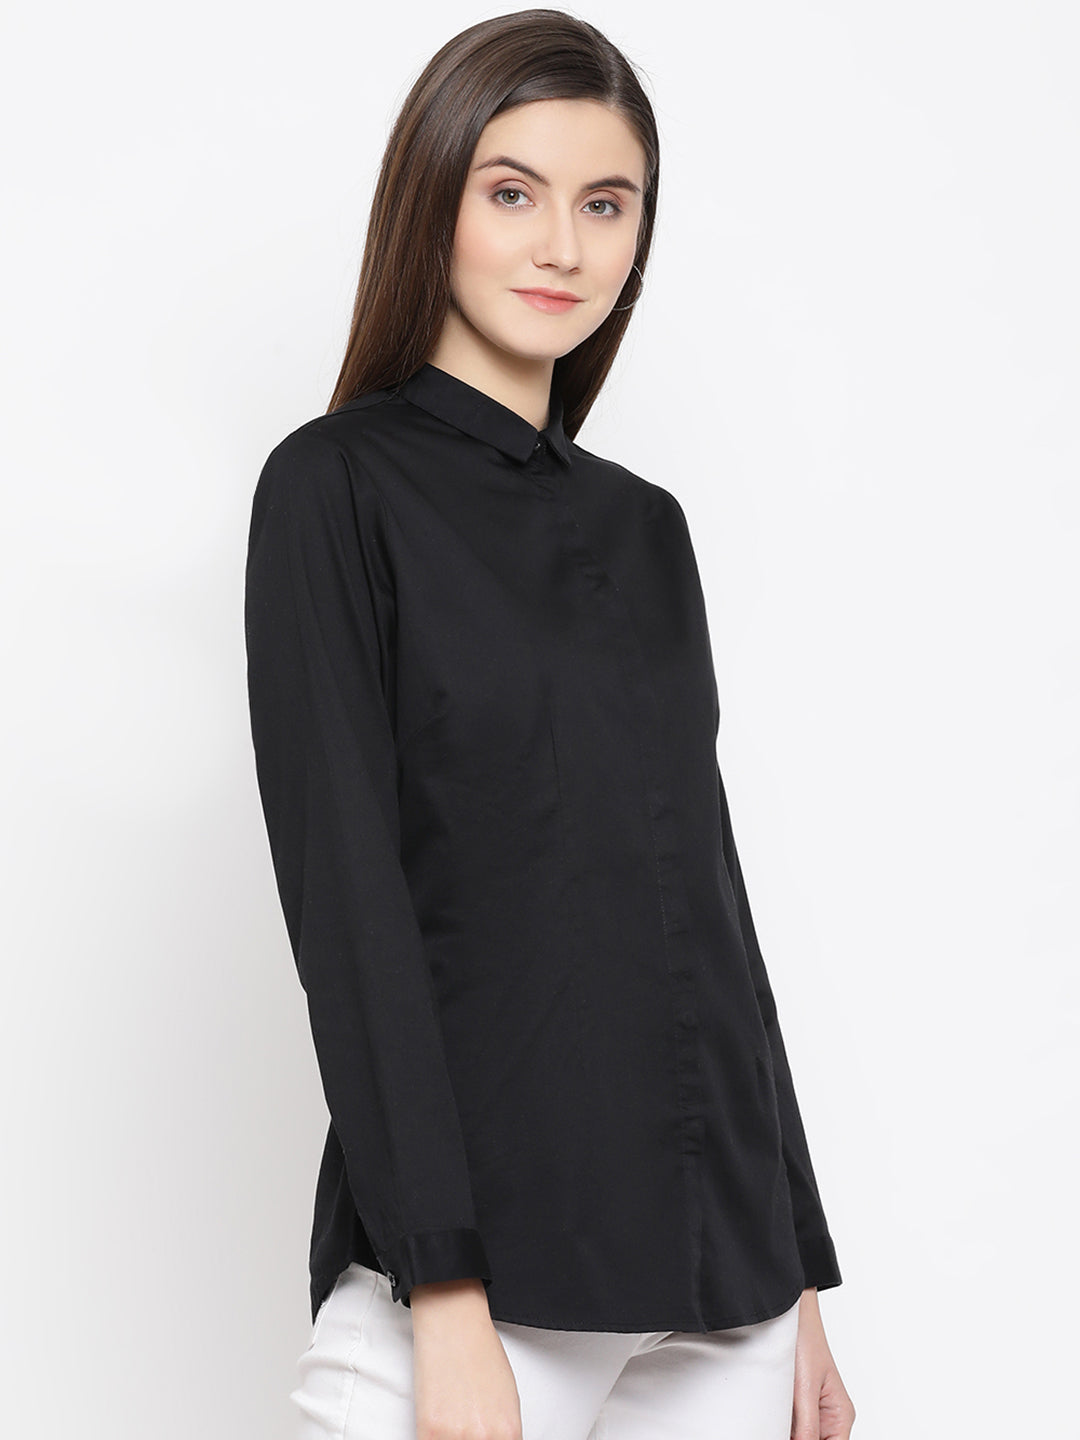 Black Button up Shirt - Women Shirts